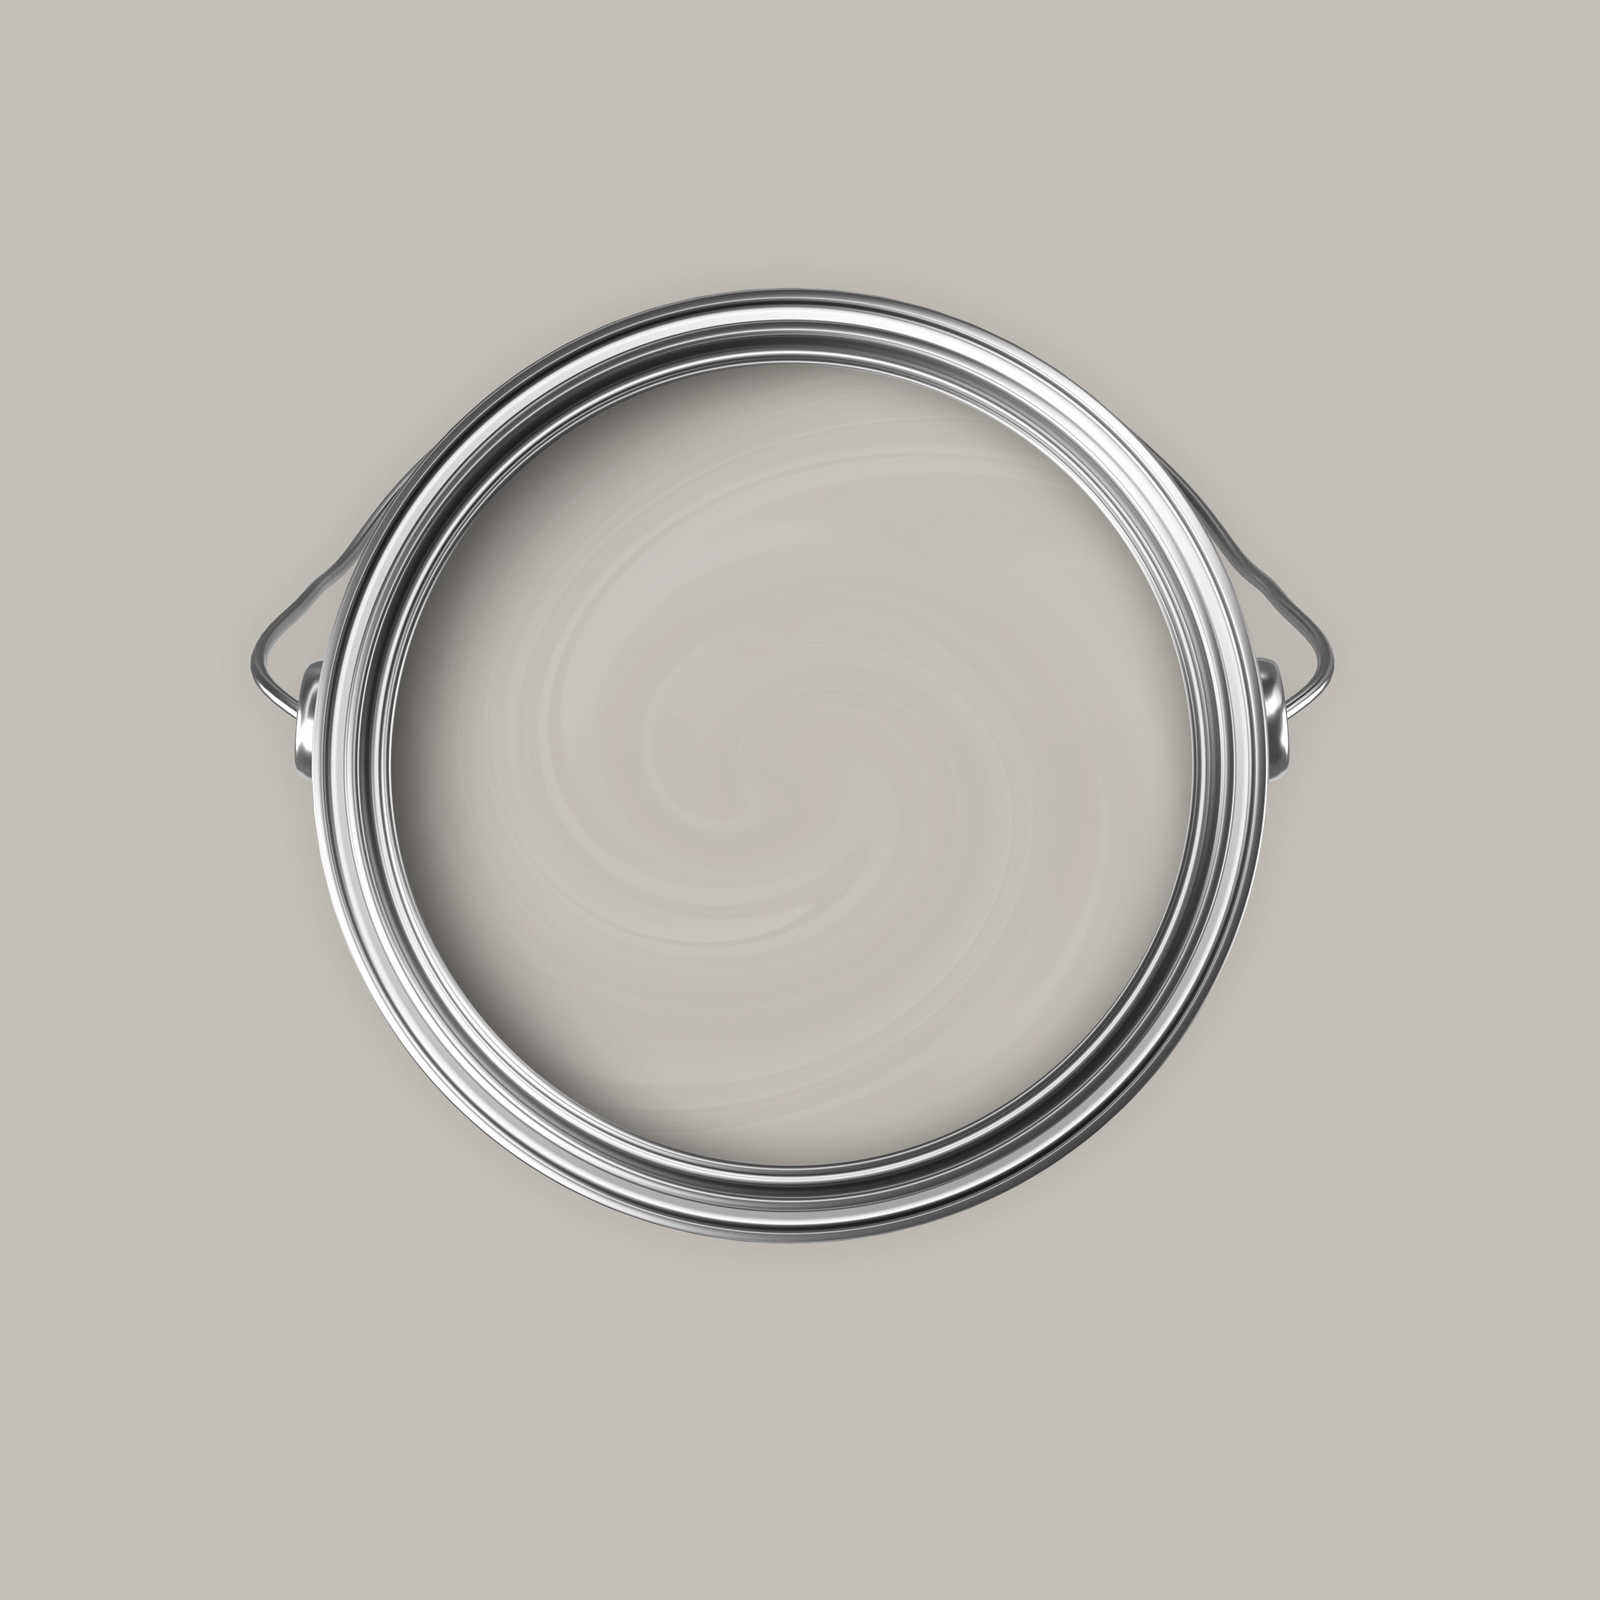             Premium Wall Paint soft silk grey »Creamy Grey« NW111 – 5 litre
        